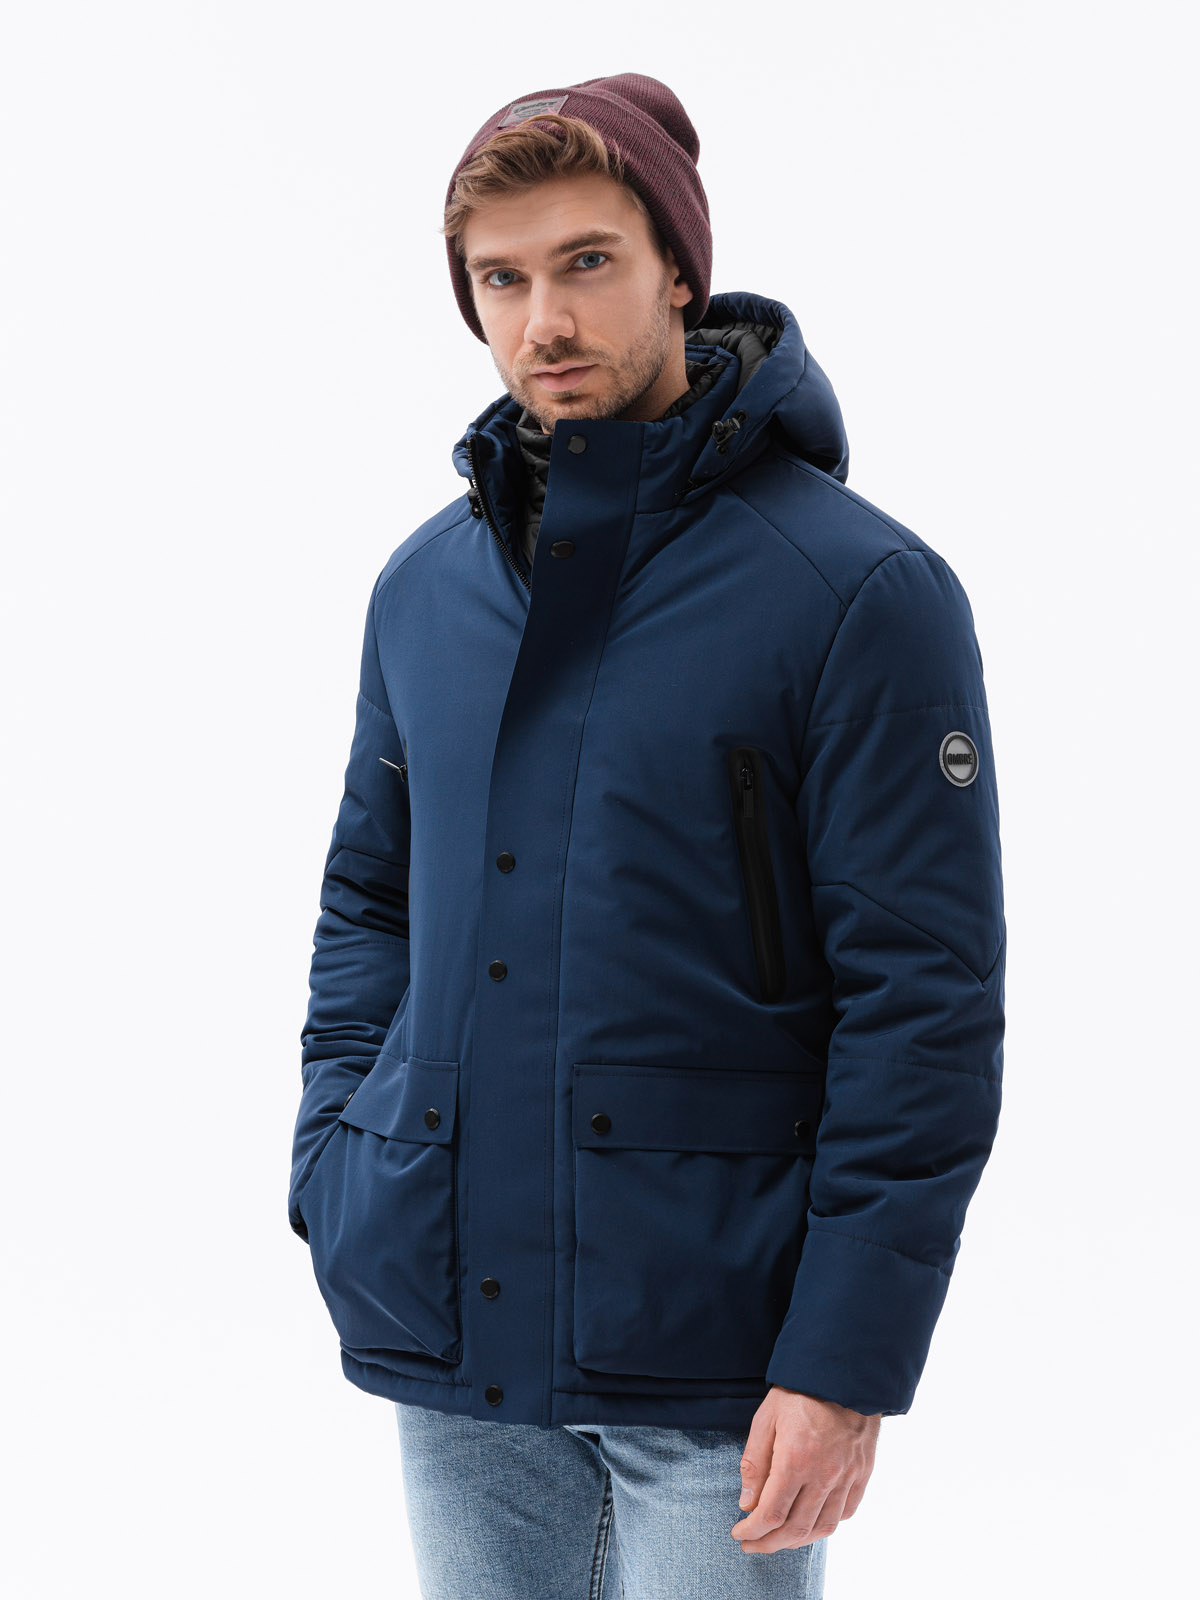 Men's winter jacket C449 - navy | MODONE wholesale - Clothing For Men